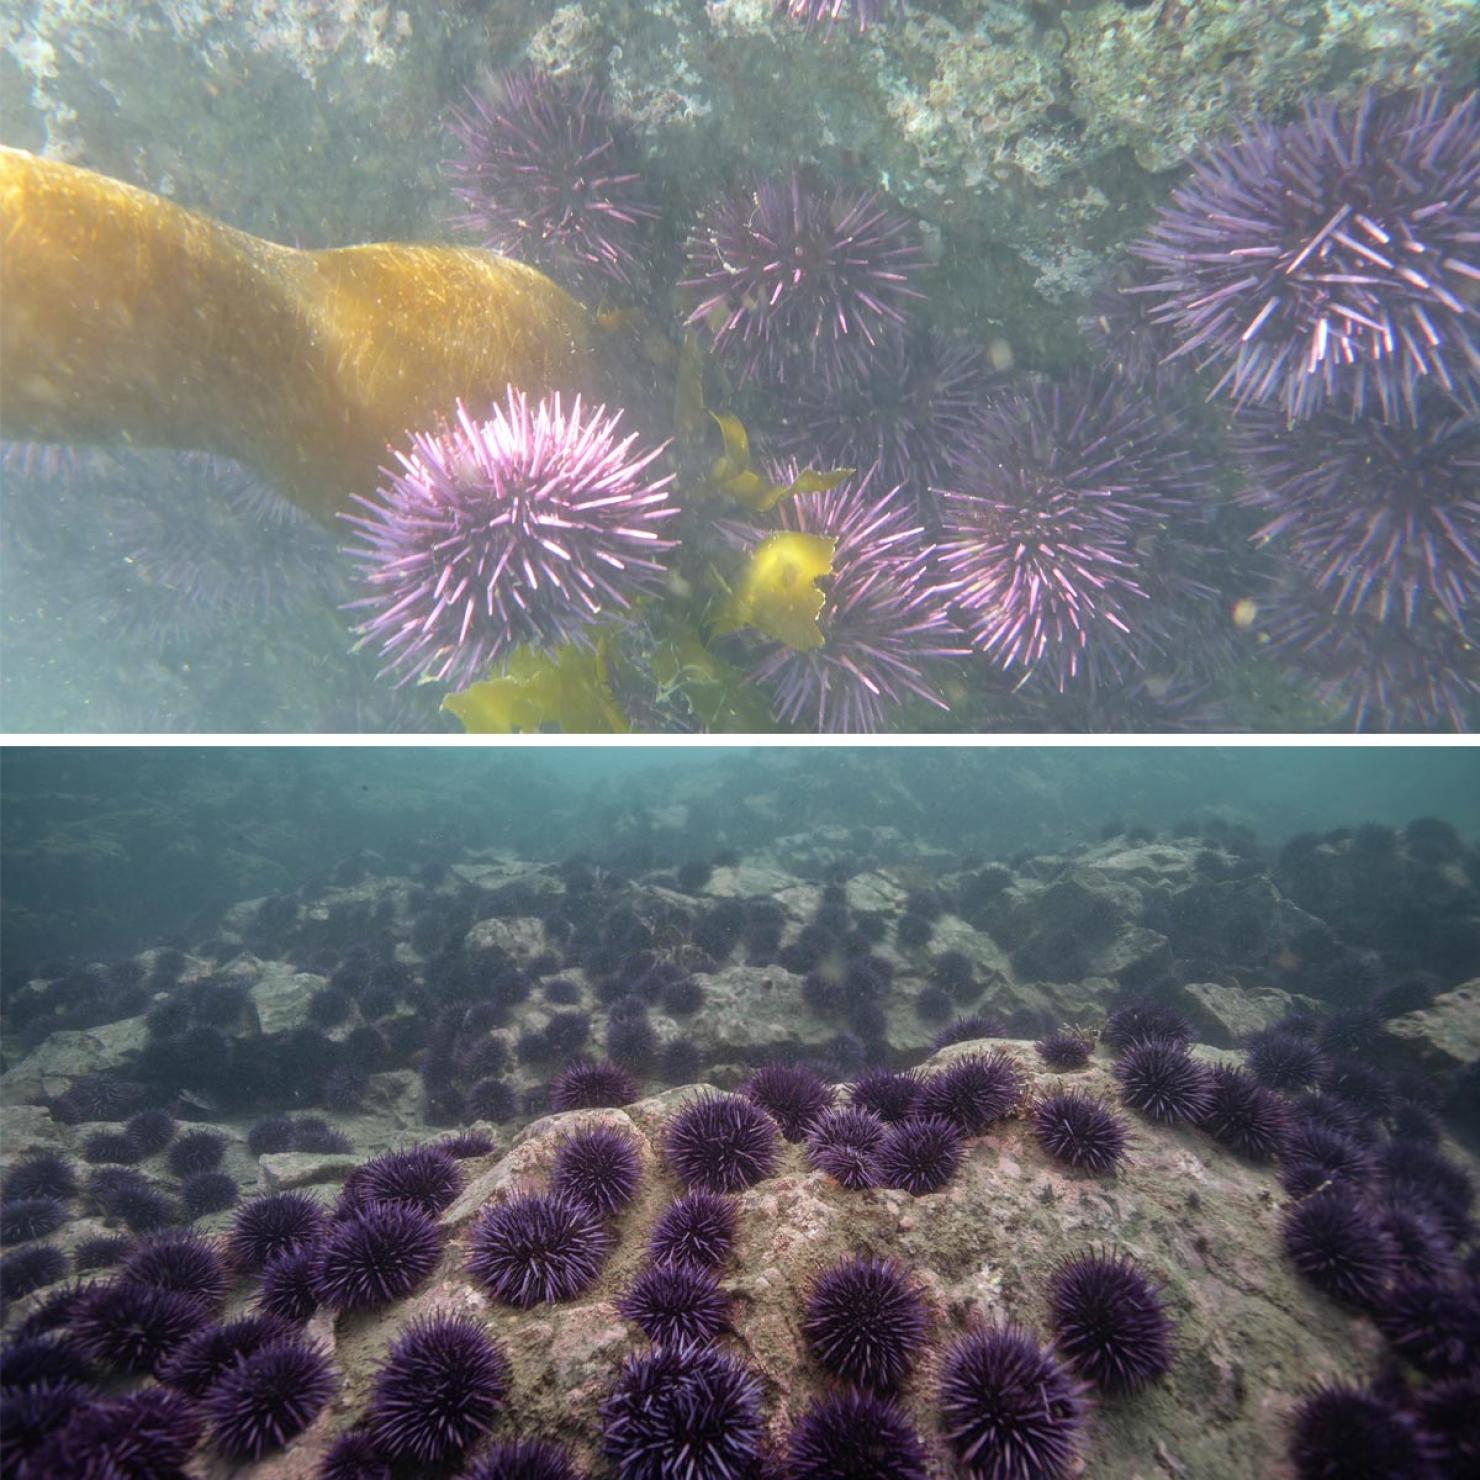 Two photos of urchin on sea floor